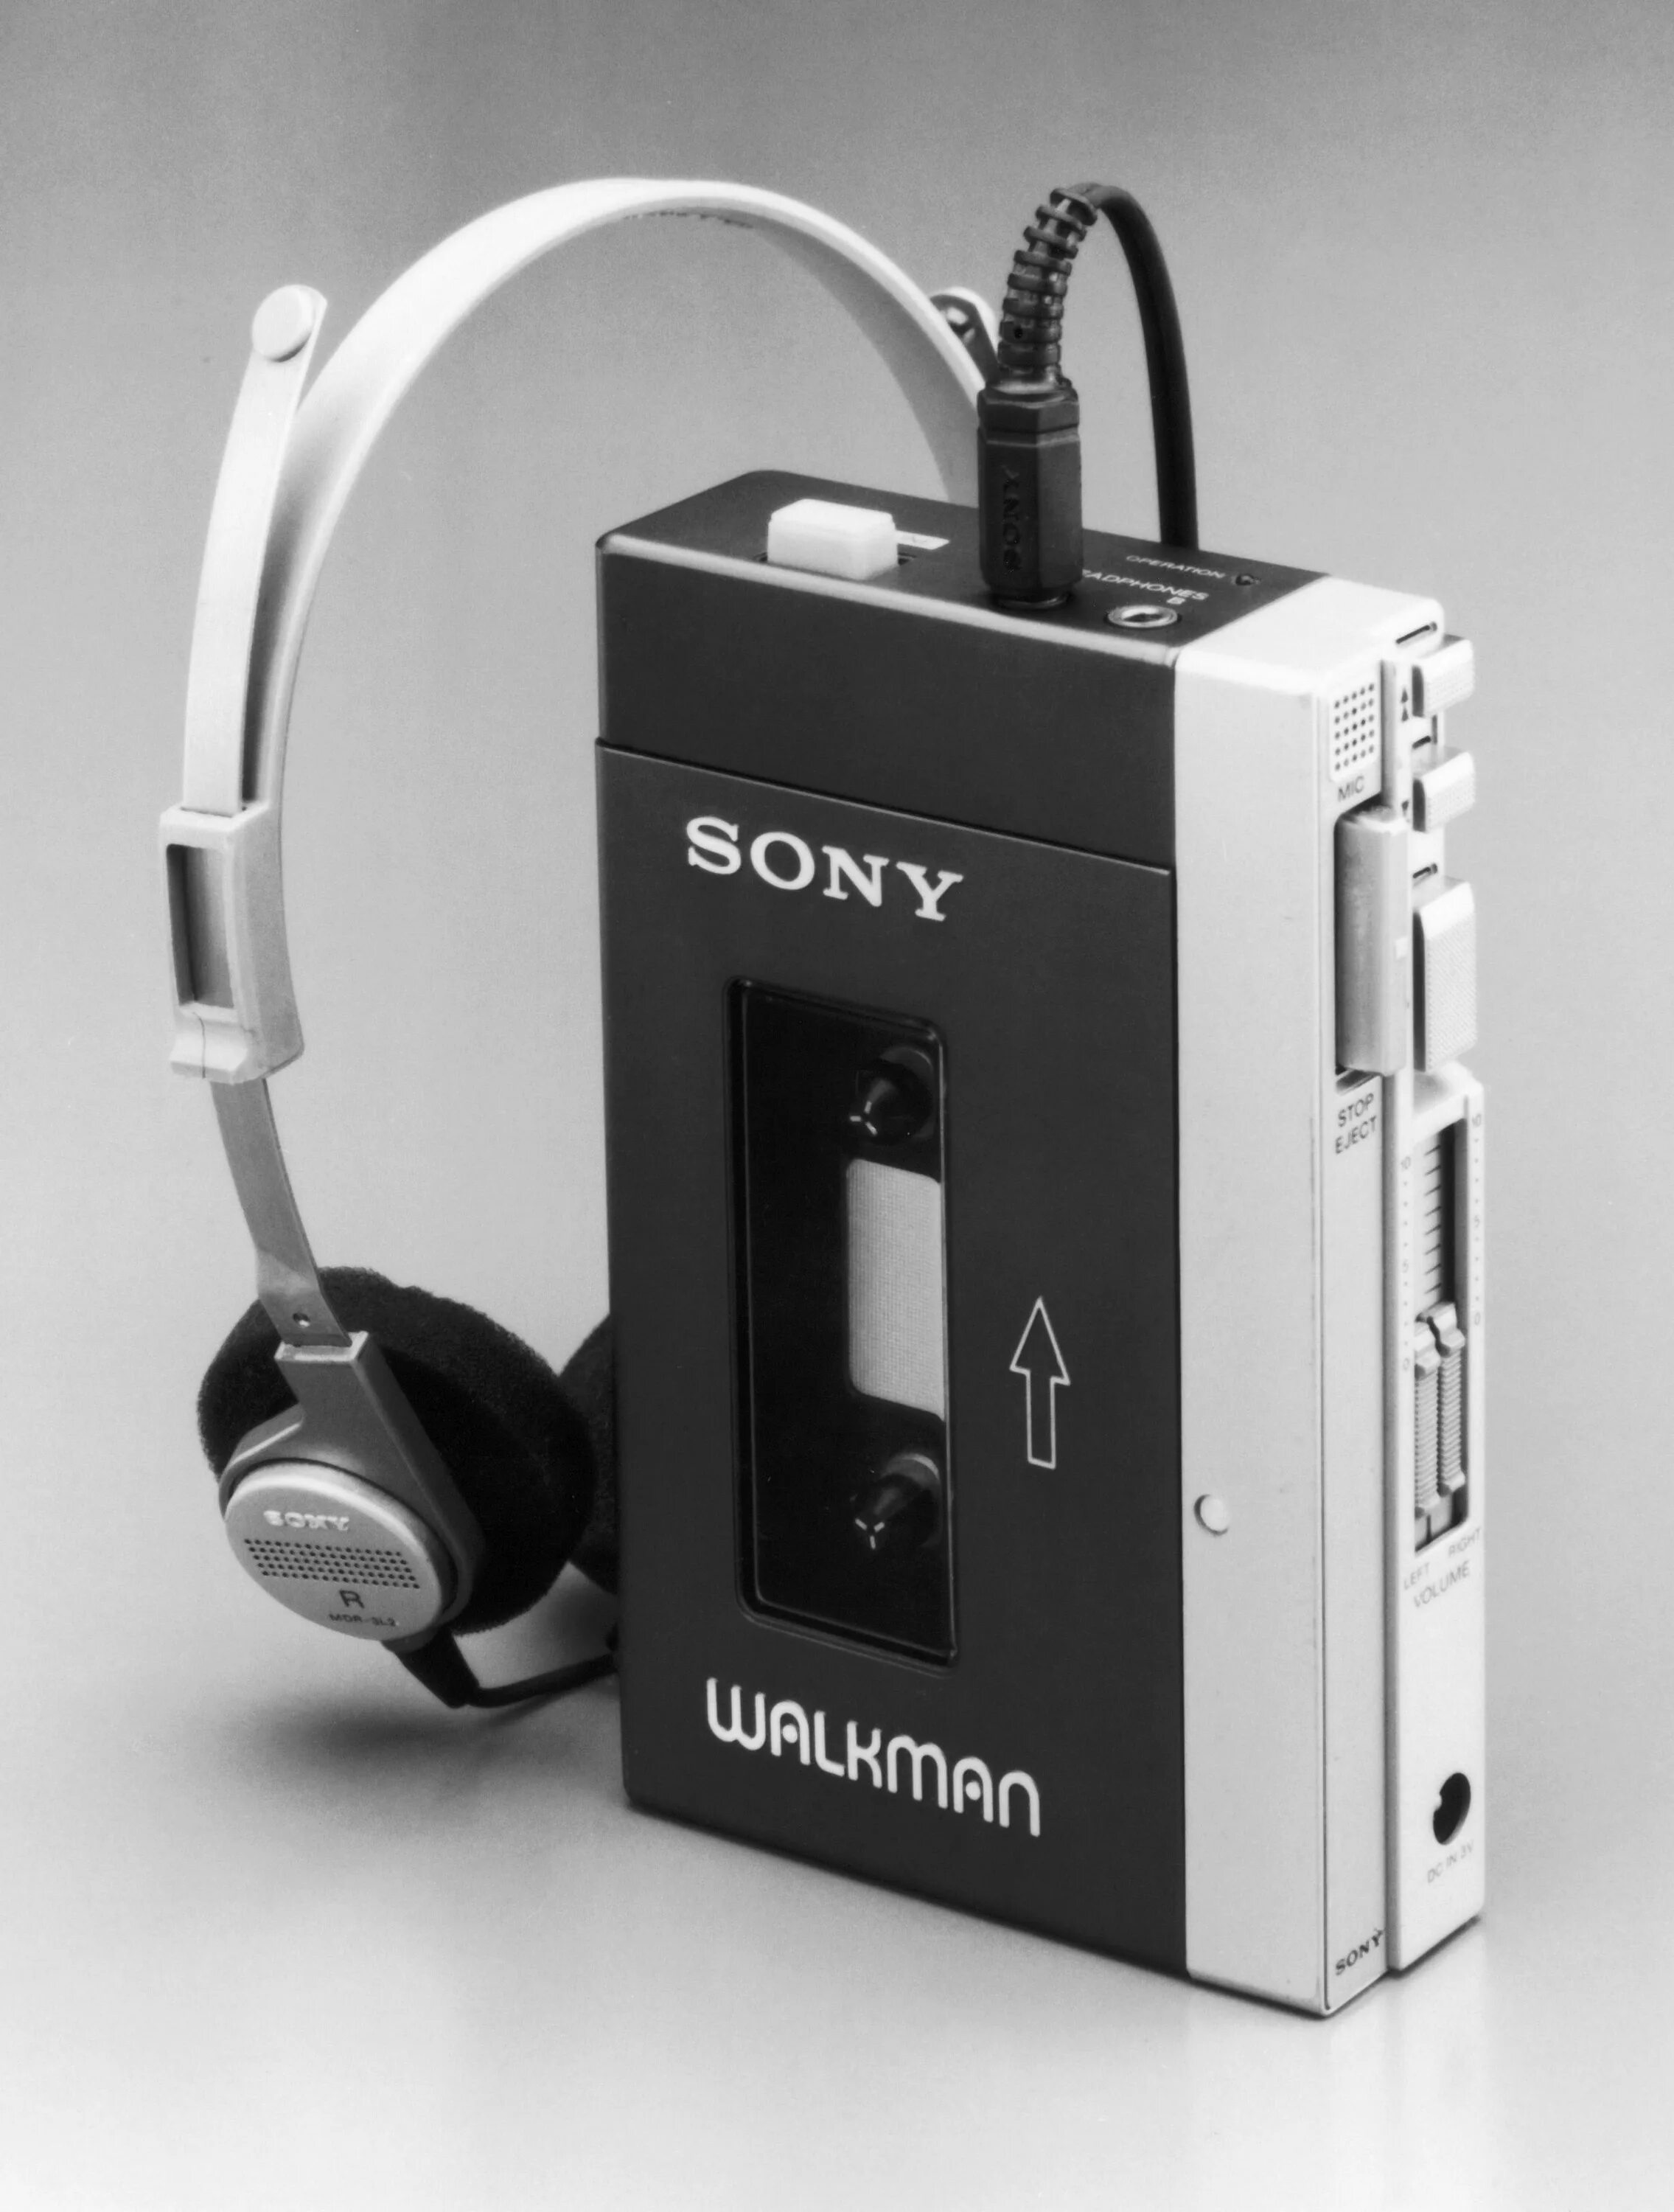 Sony Walkman 1979. Кассетный плеер Sony Walkman. Аудиоплеер Sony Walkman 1979. Sony Walkman кассетный 1980.